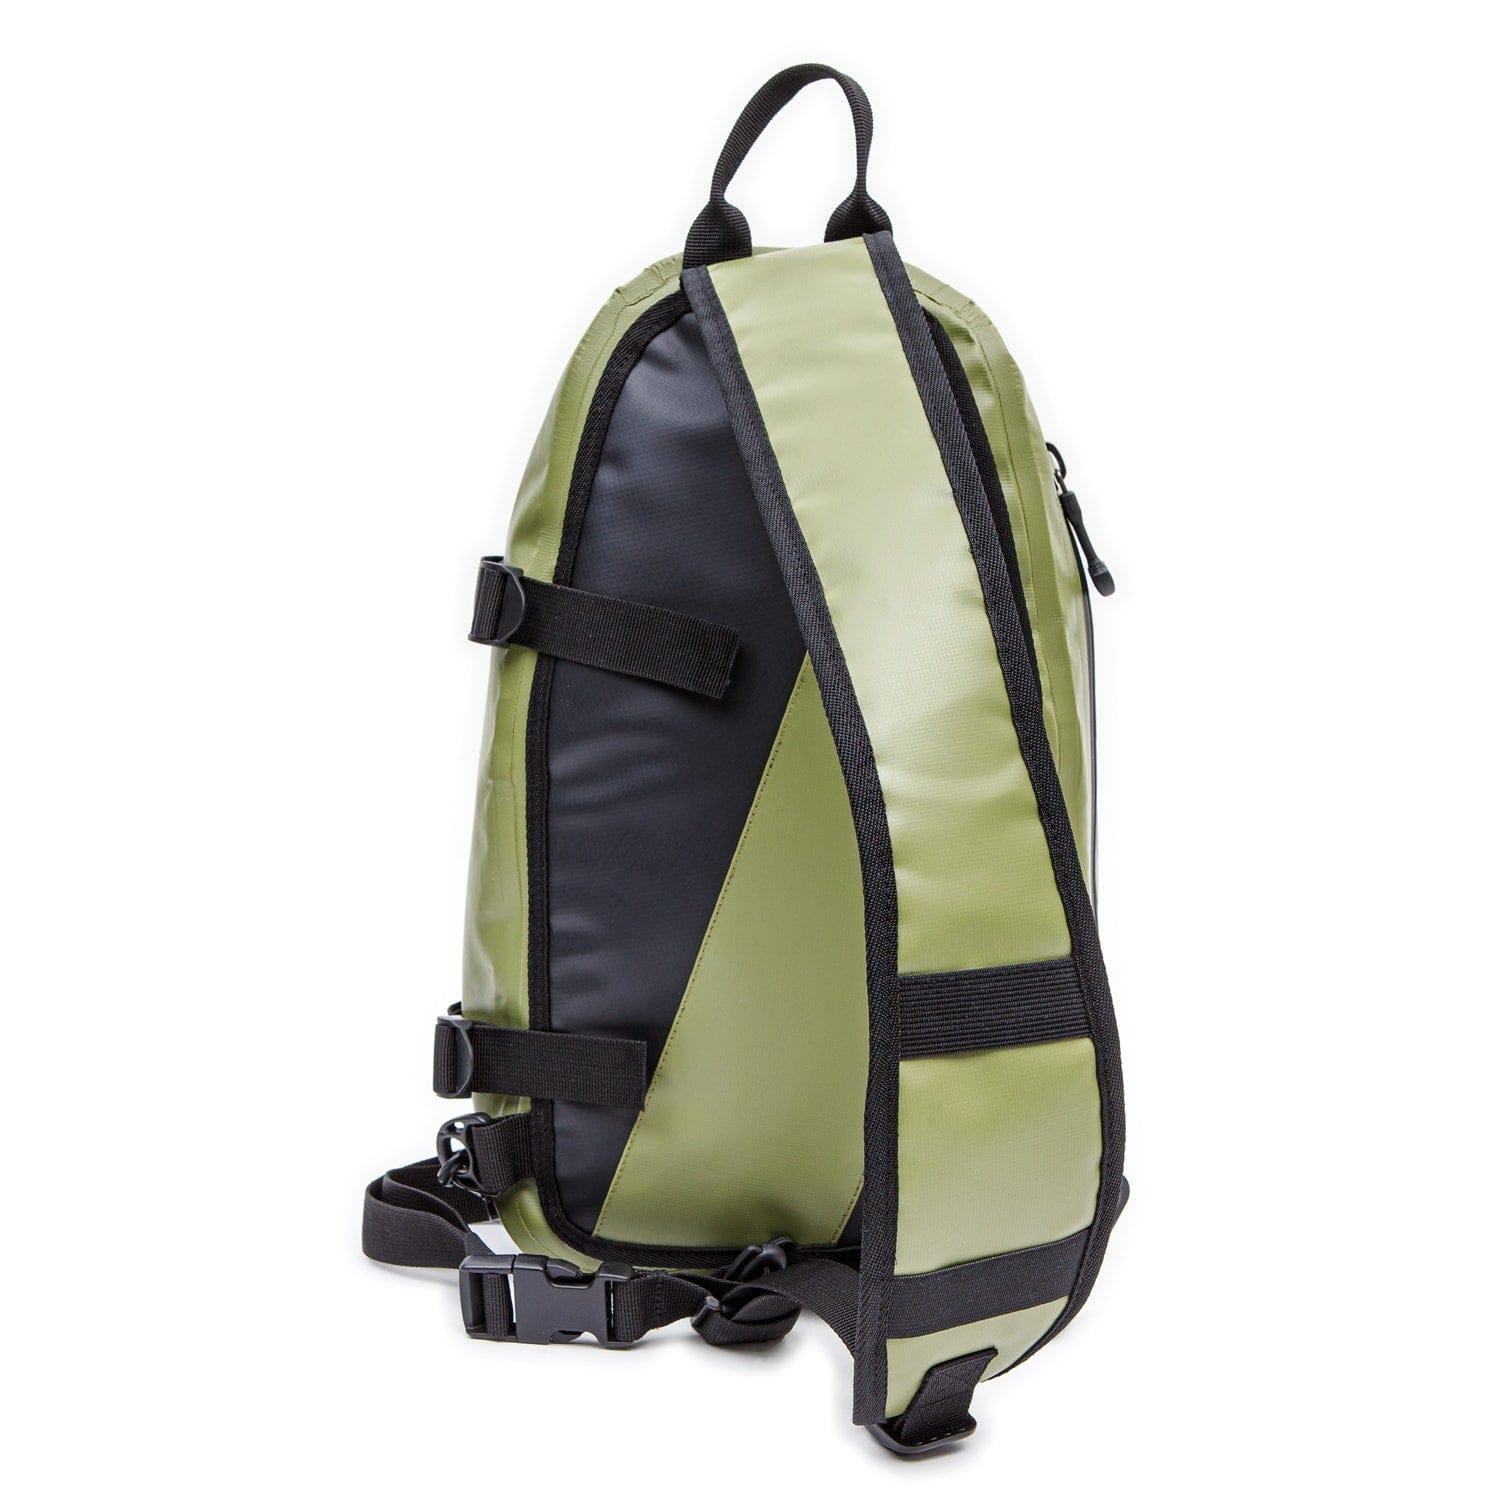 Sling, Unisex Sling Bag, Water-Resistant Materials